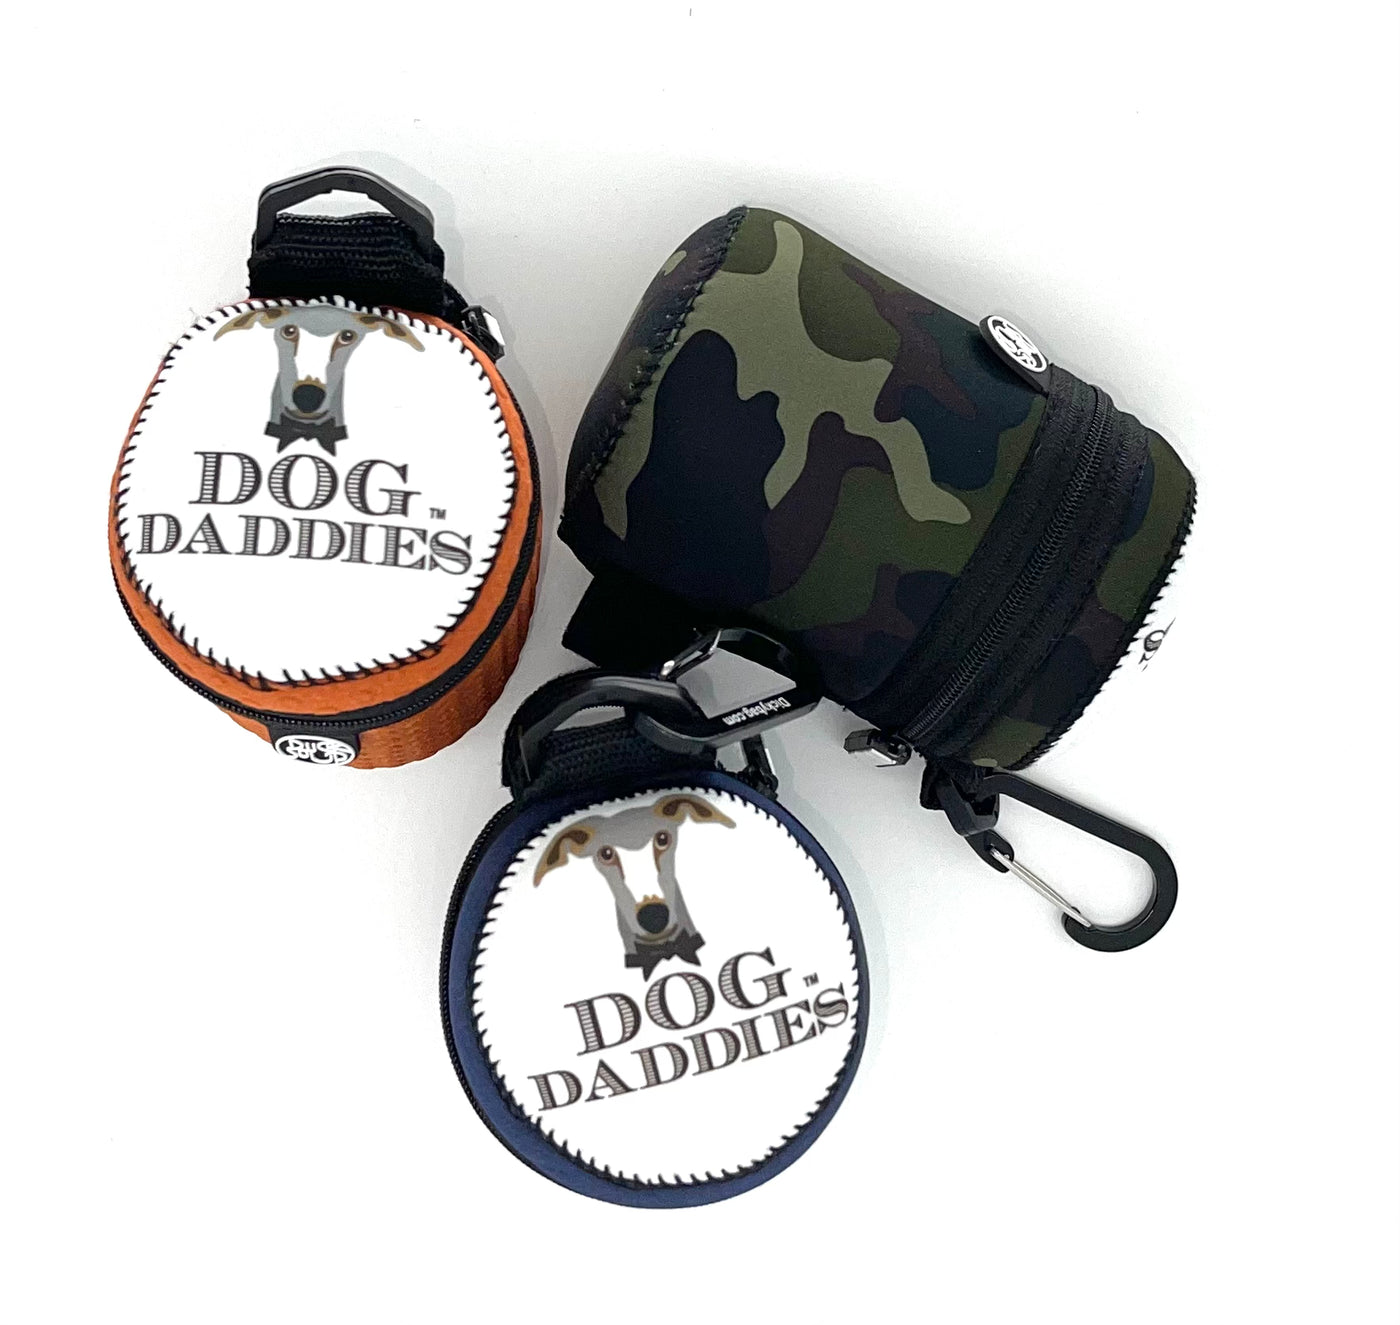 DogDaddies Poo Waste Bag holder